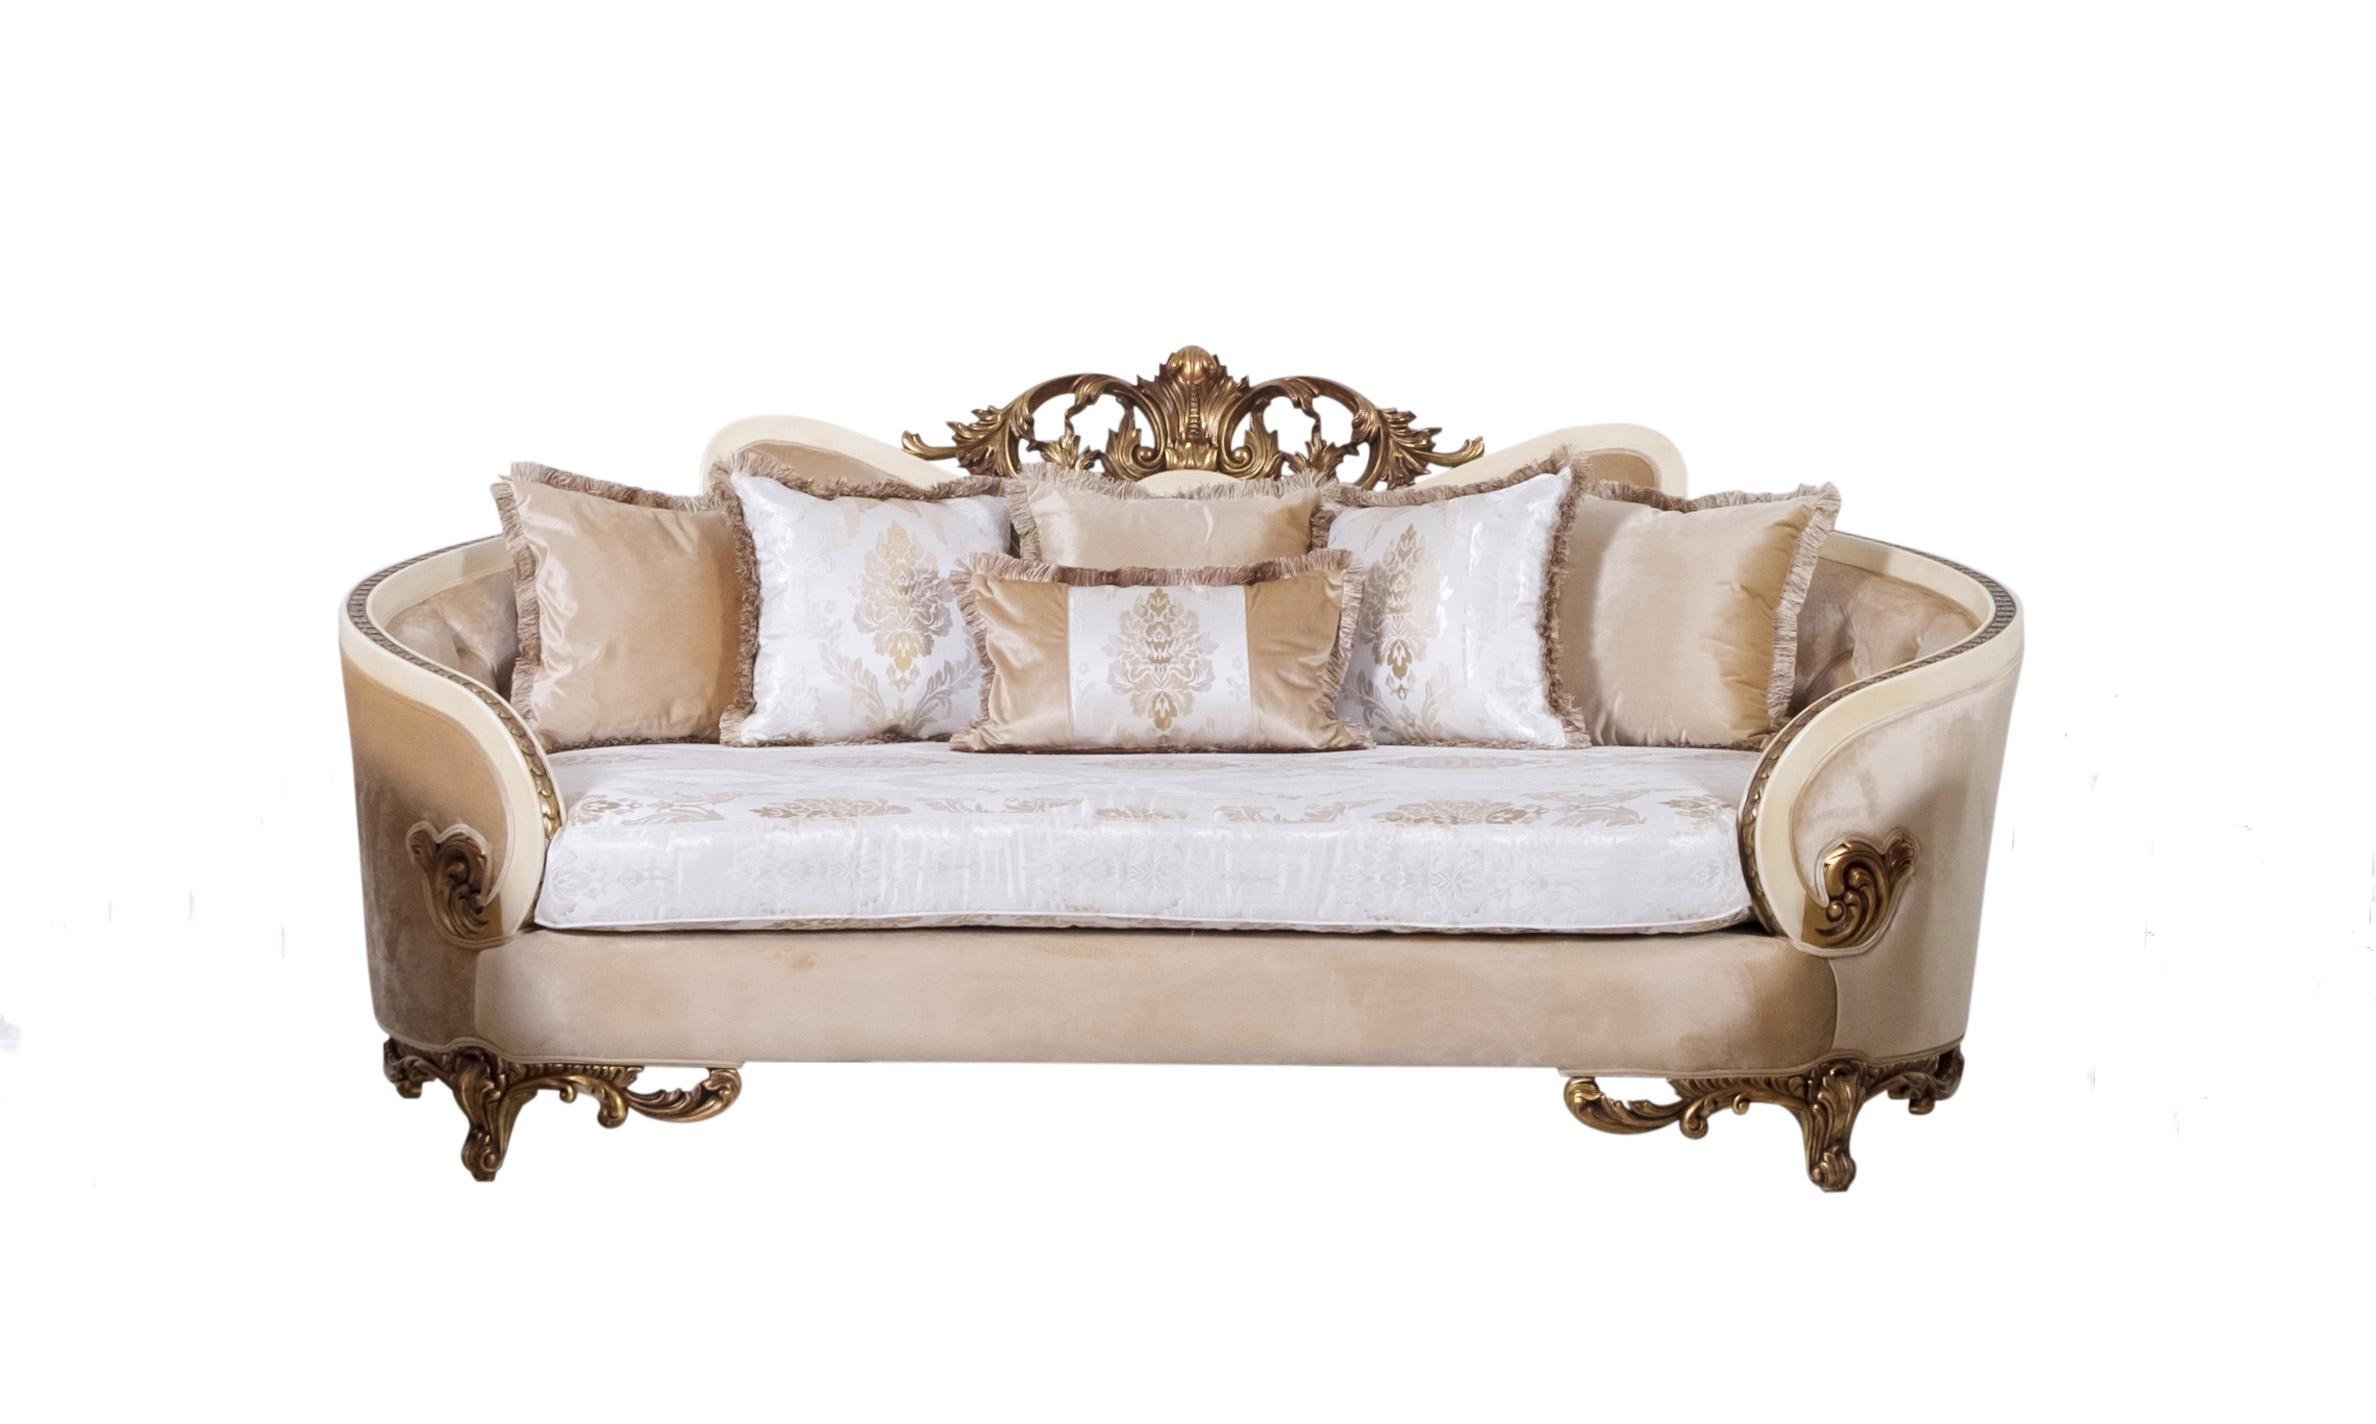 Classic, Traditional Sofa ROSABELLA 36031-S in Antique, Gold, Beige Fabric